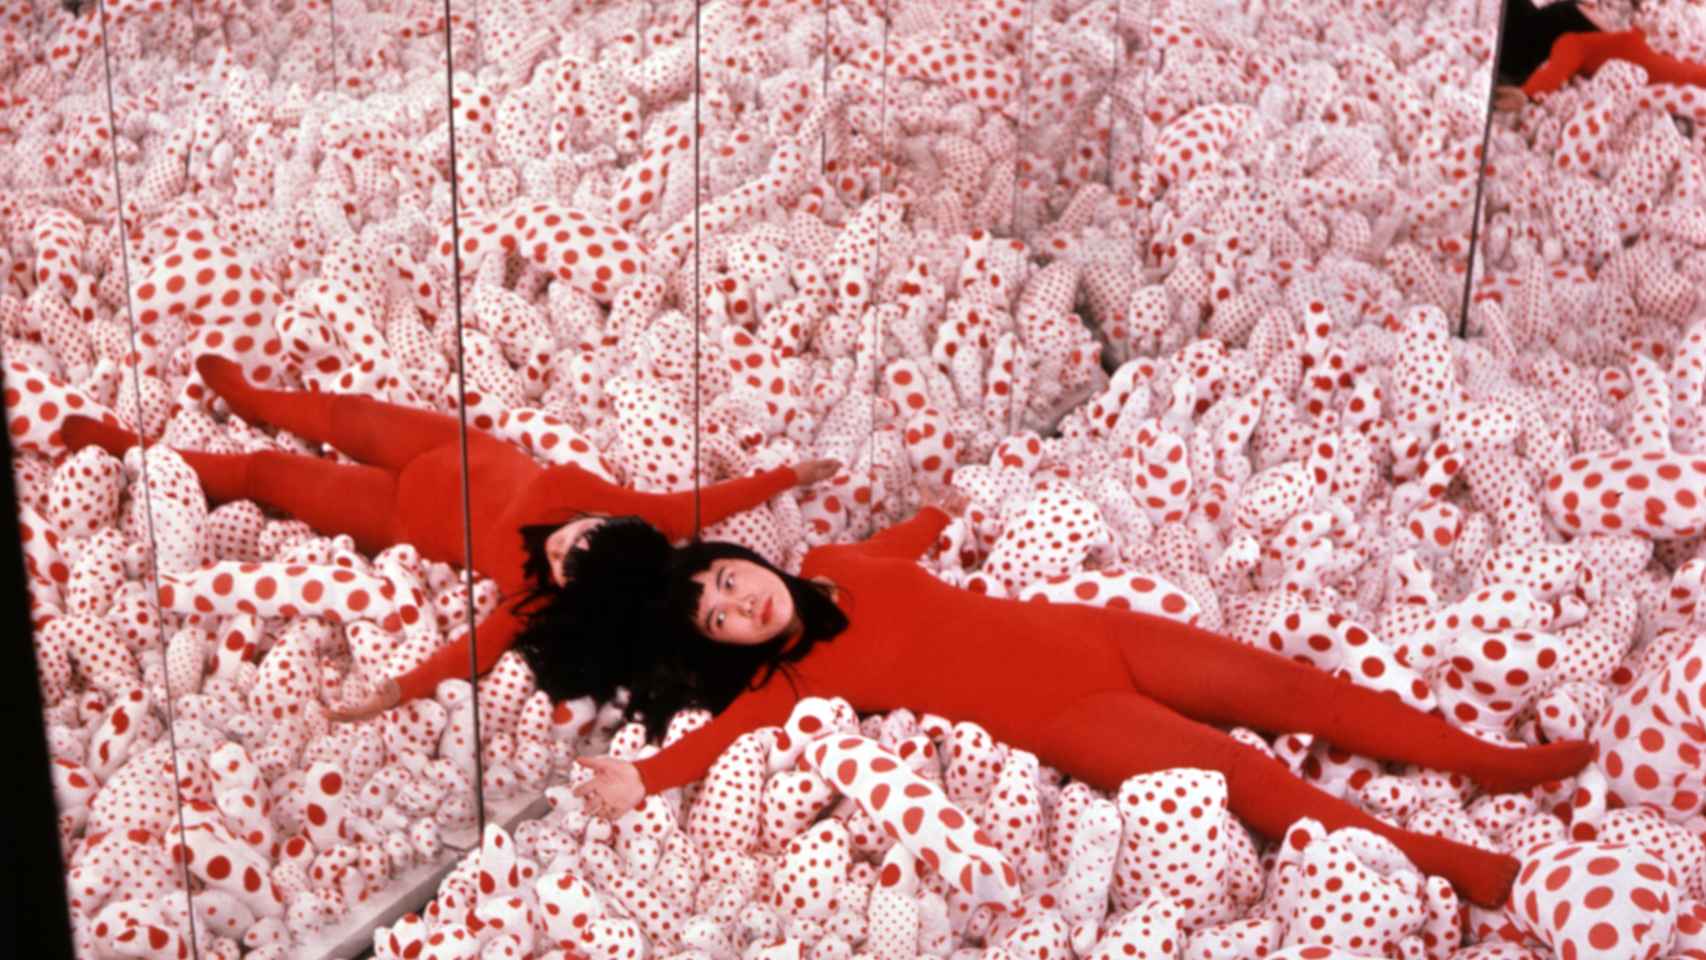 Yayoi Kusama en 'Infinity Mirror Room - Phalli's Field' (Sala espejada de infinito: Campo de falos), 1965